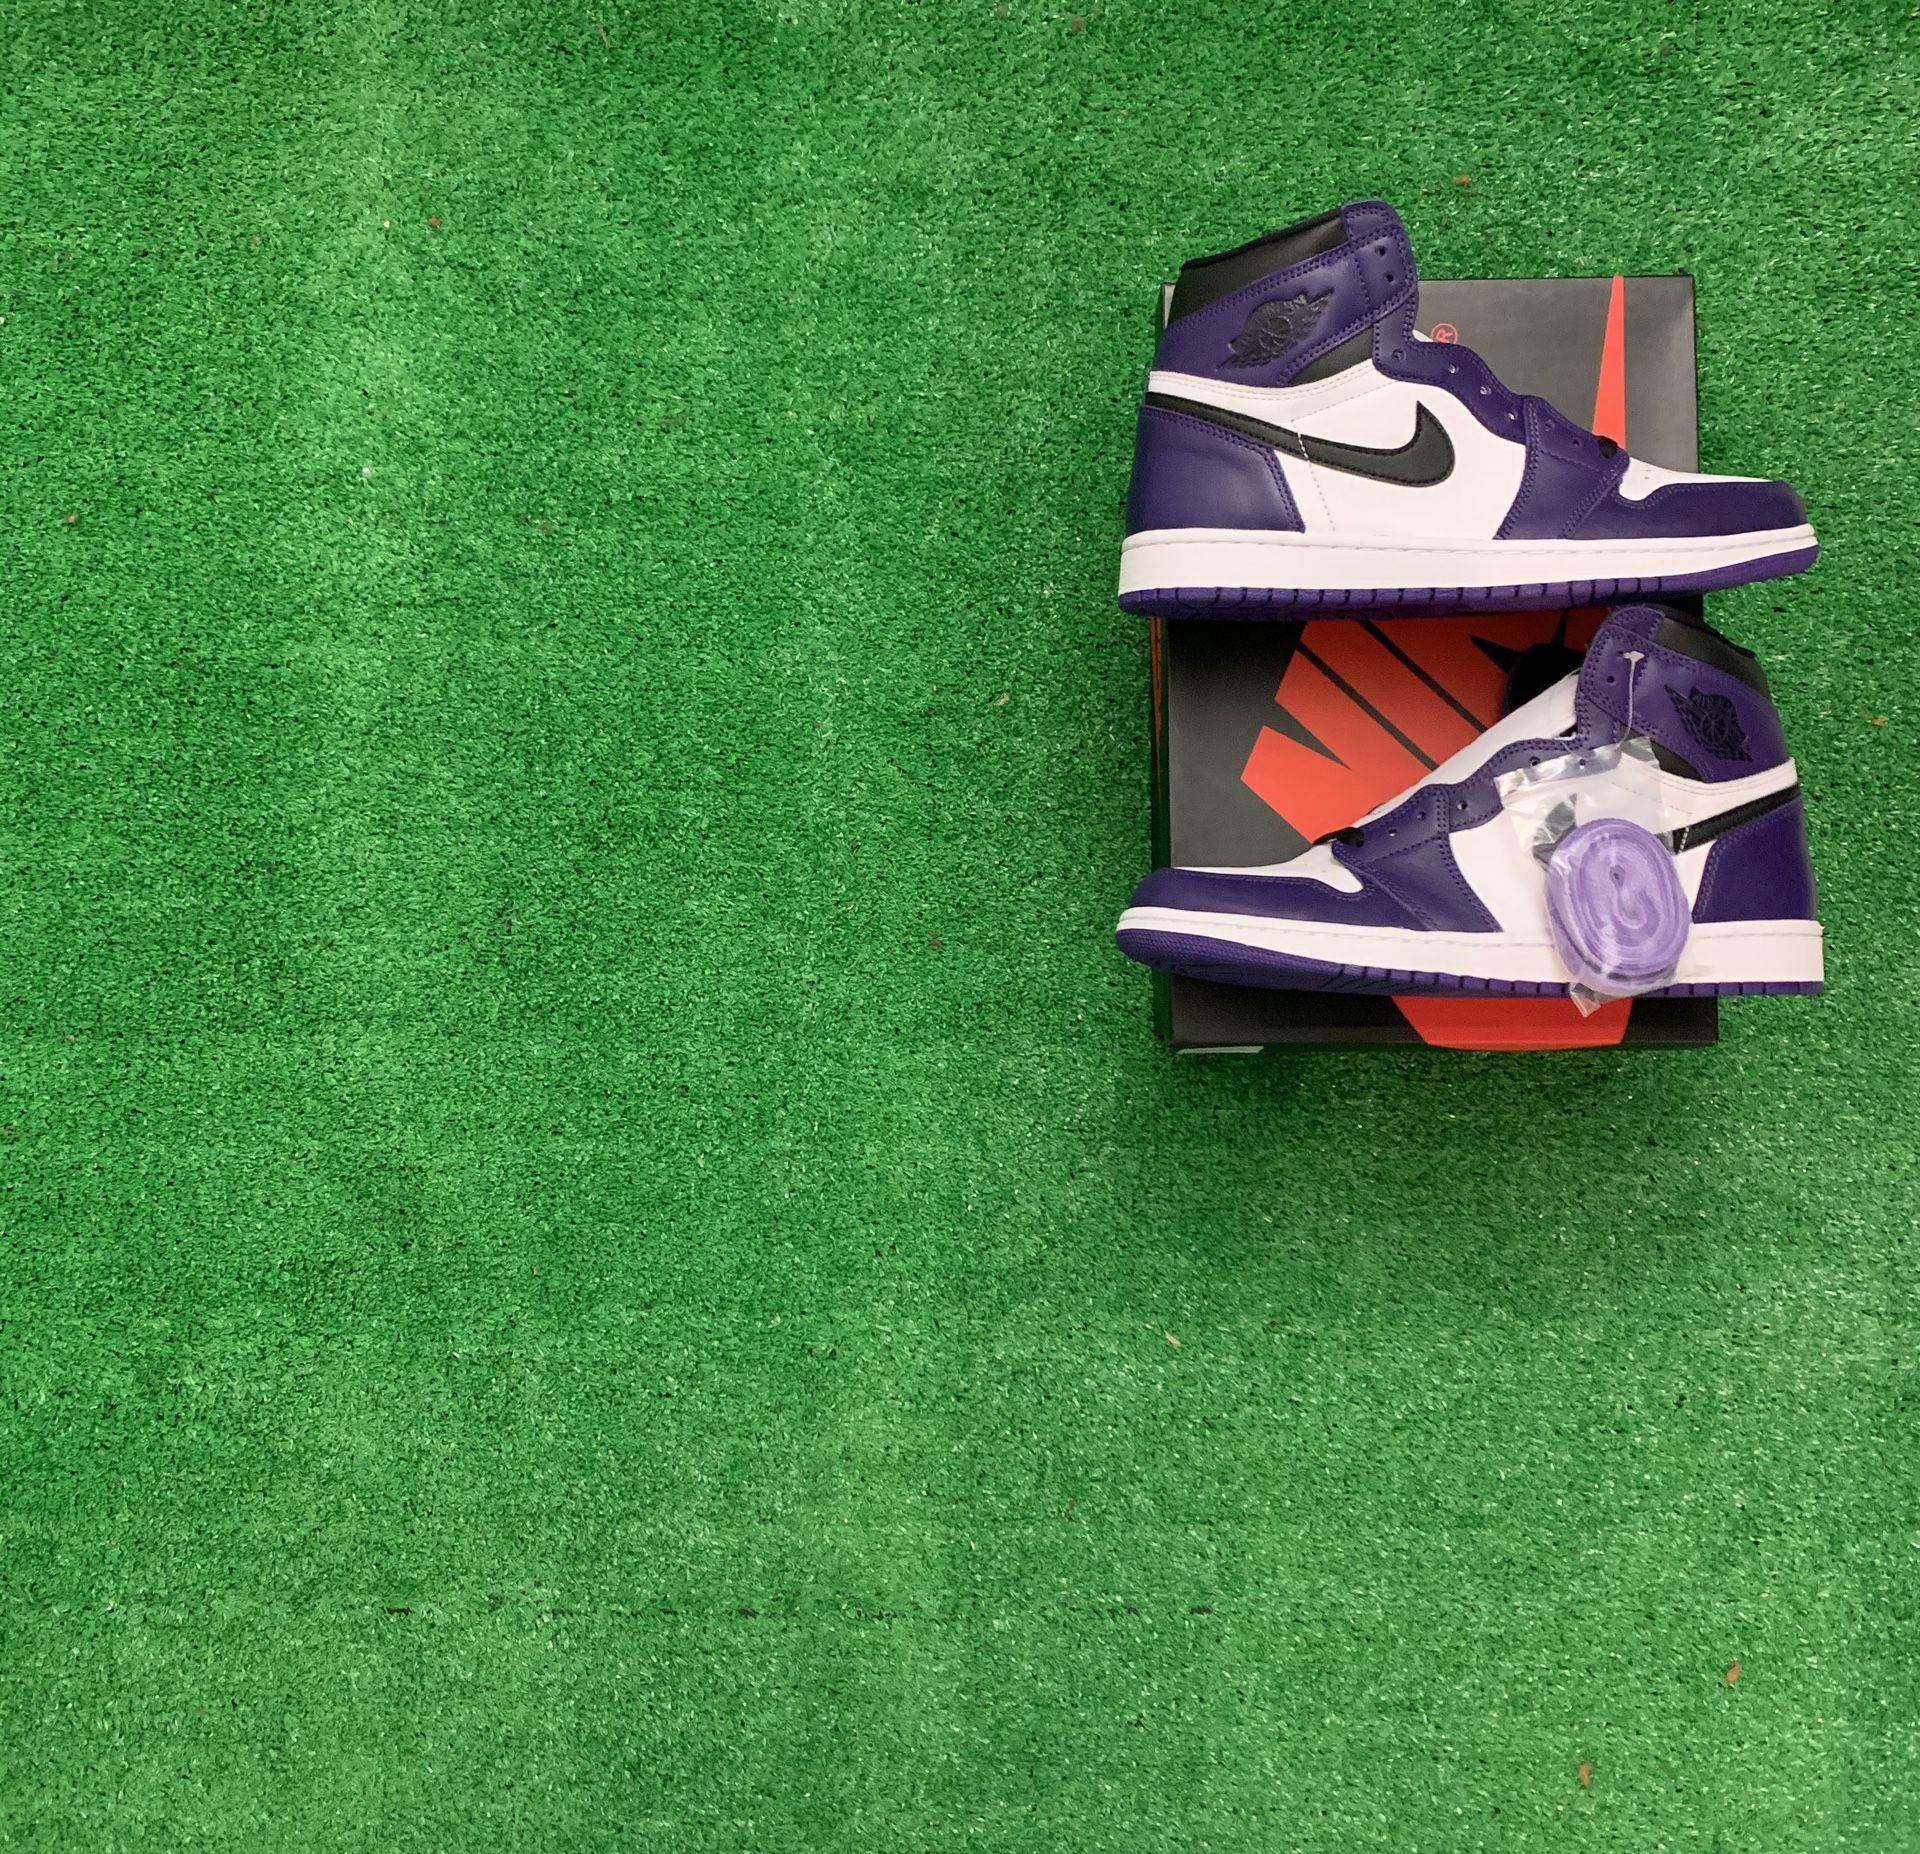 Jordan 1 retro court purple white size 10